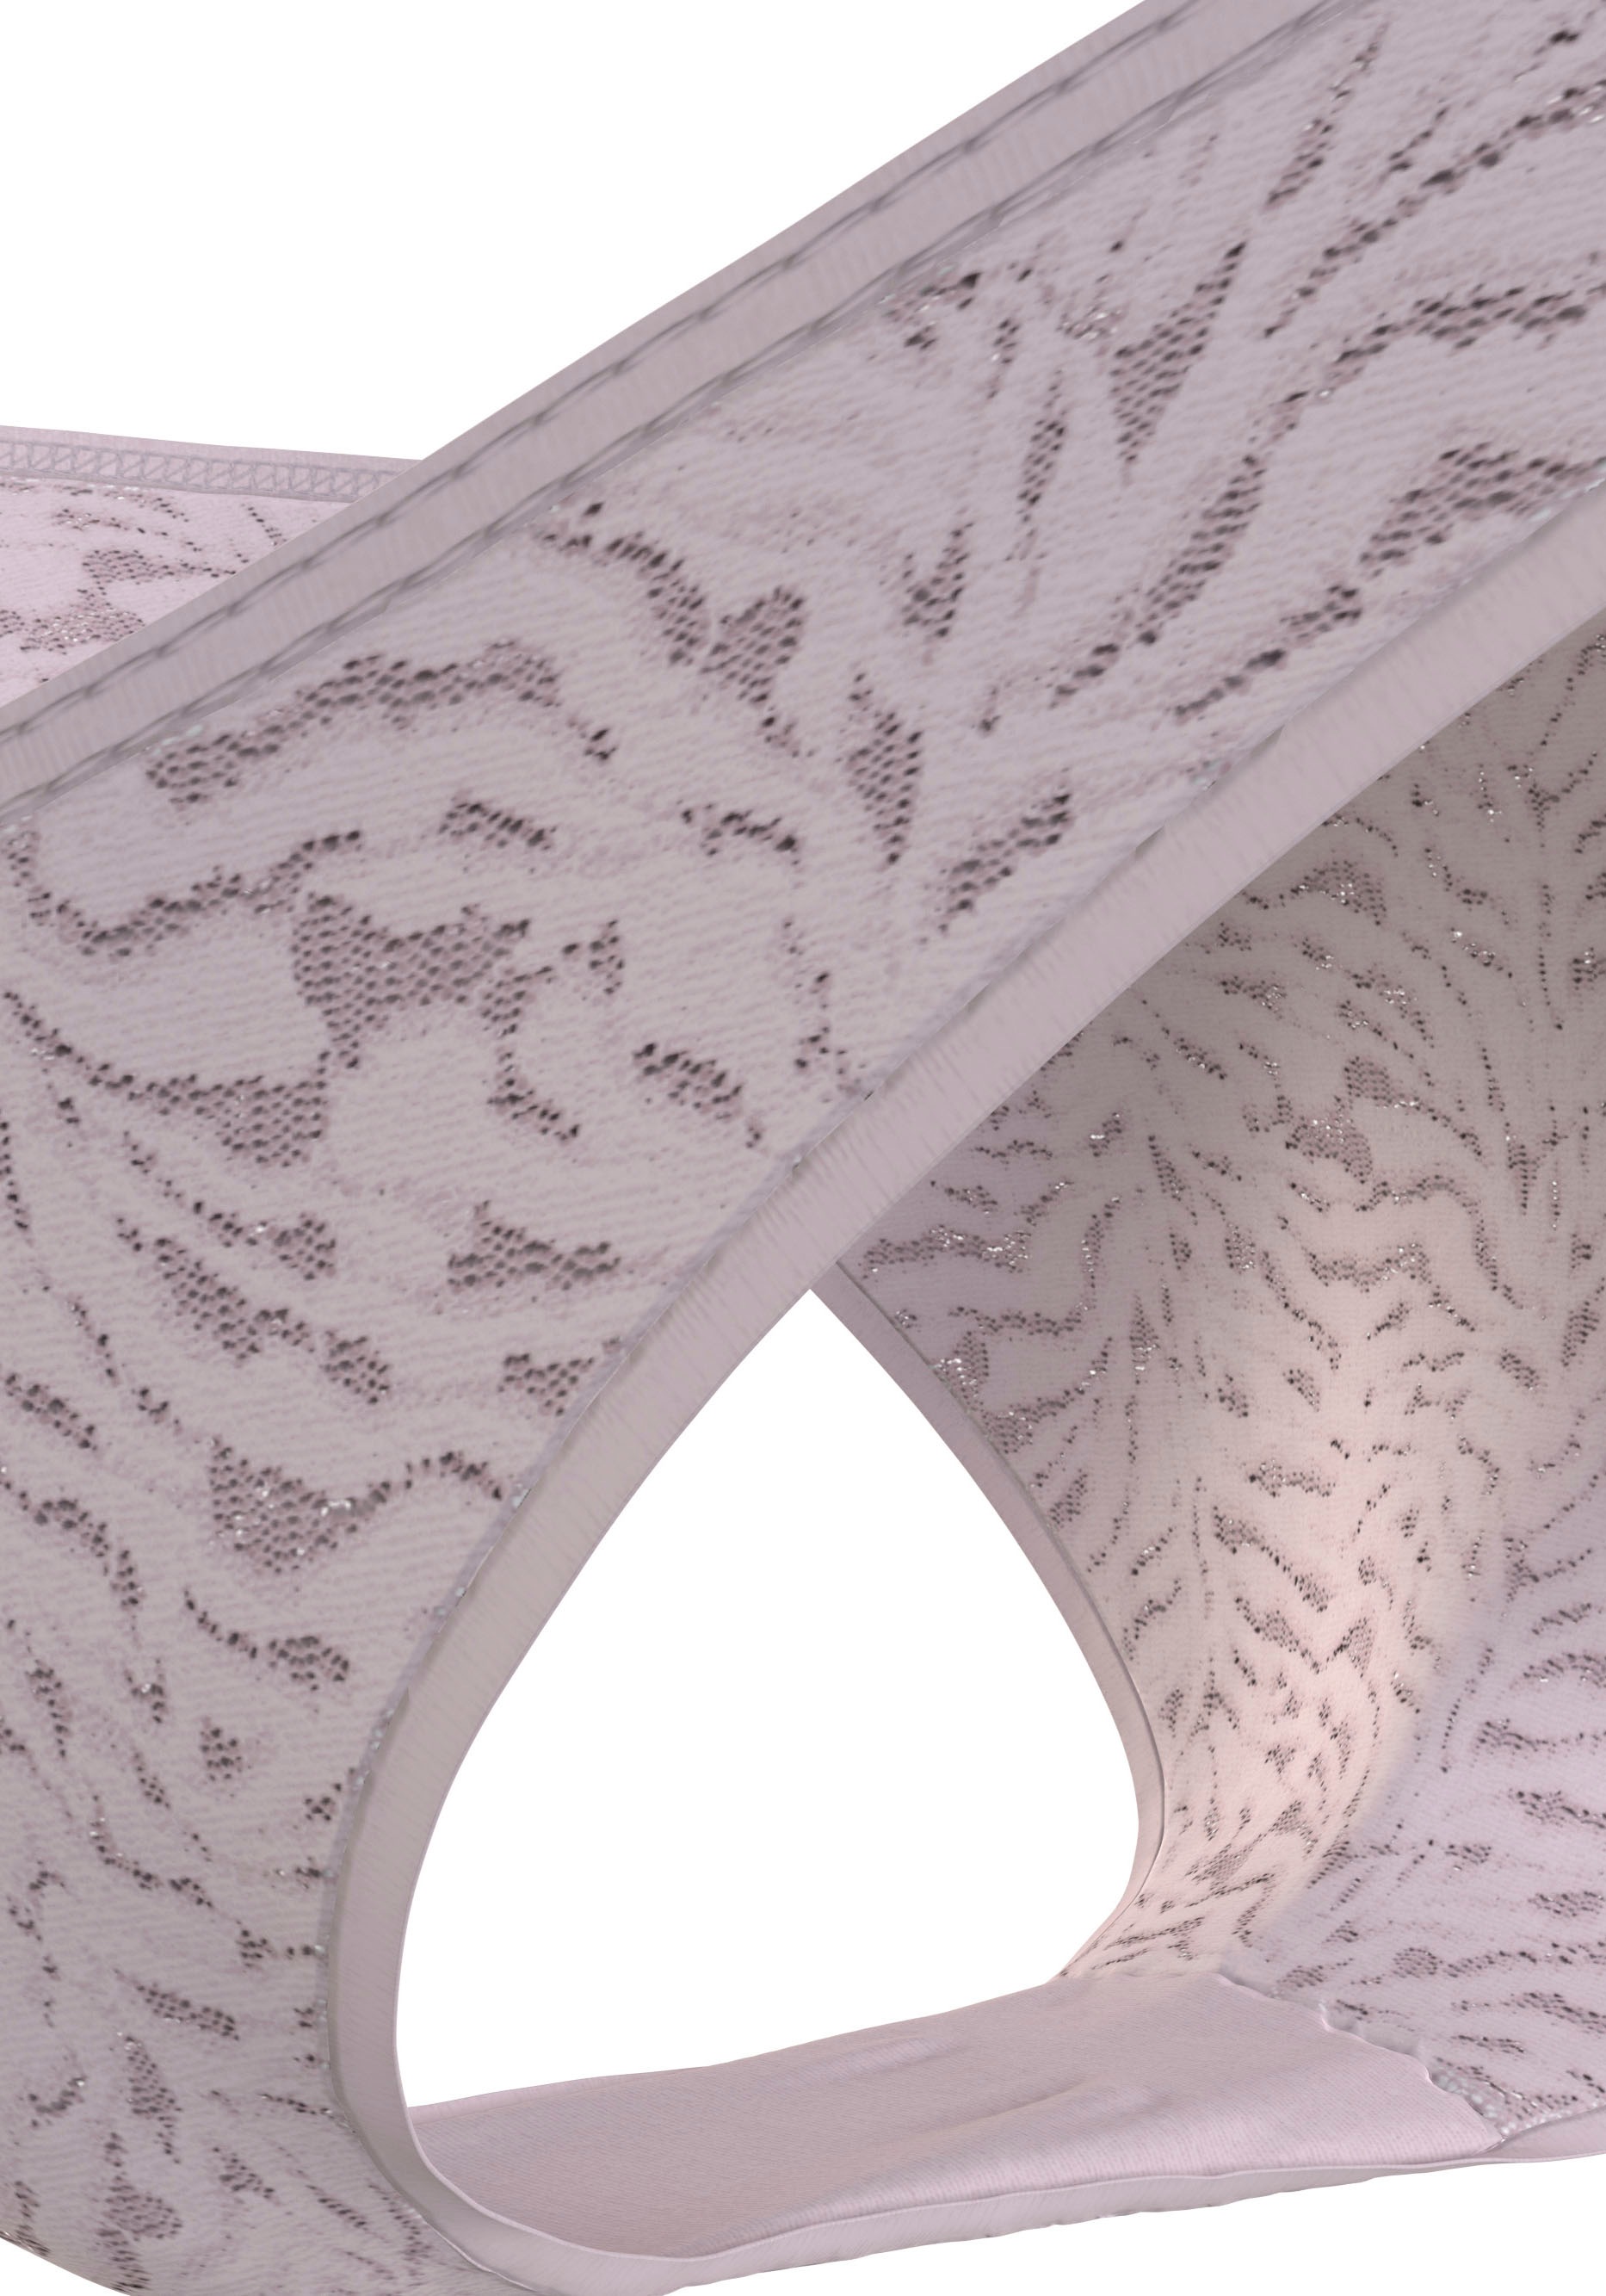 Calvin Klein Underwear Bikinislip »BIKINI«, aus elastischem Material